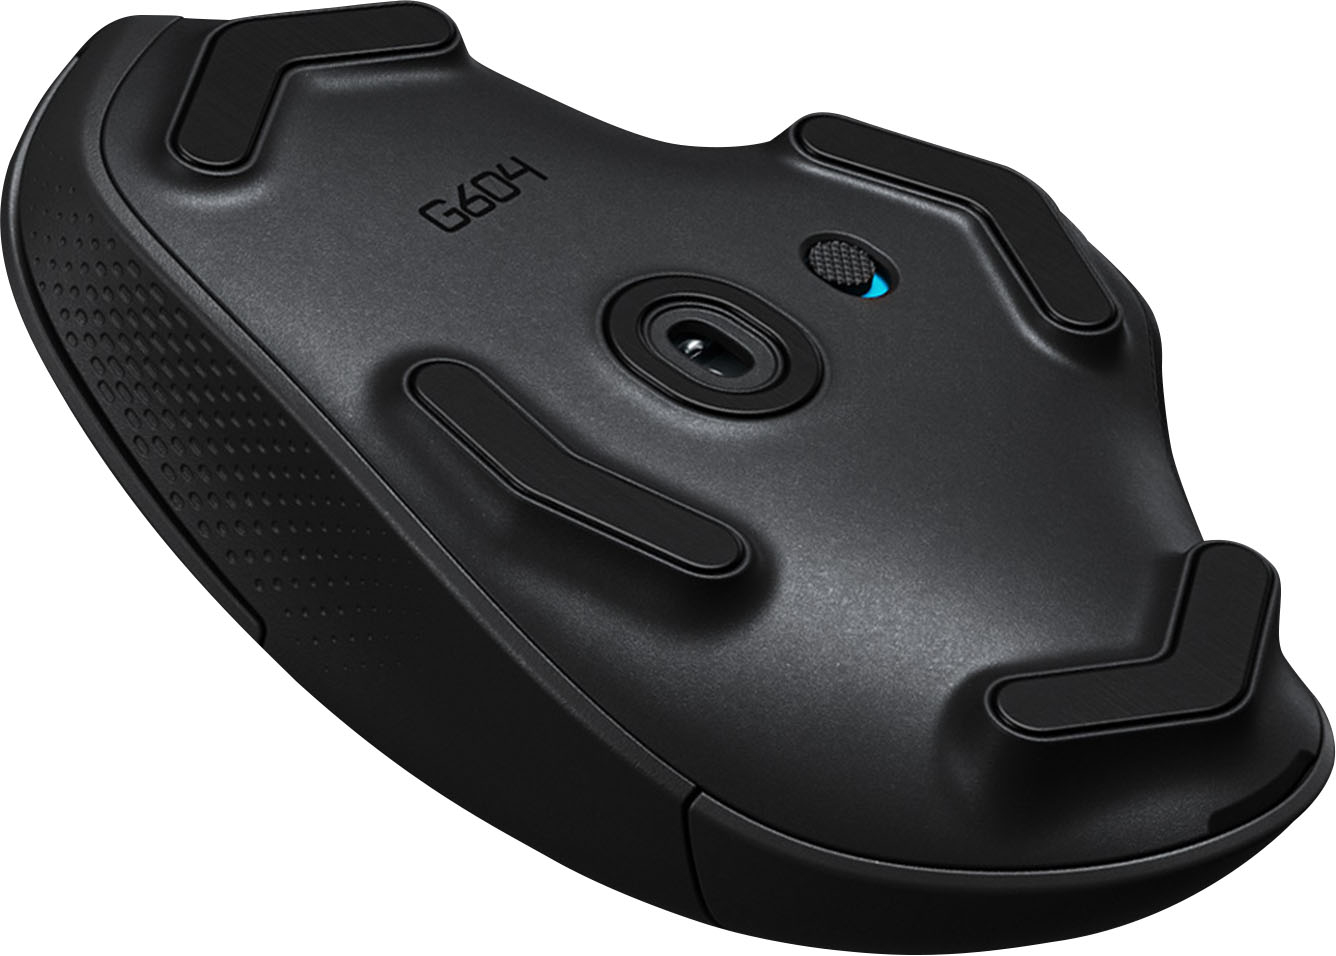 Driver G604 : Logitech G604 Wireless Optical Gaming Mouse Black / Logitech options unlocks ...